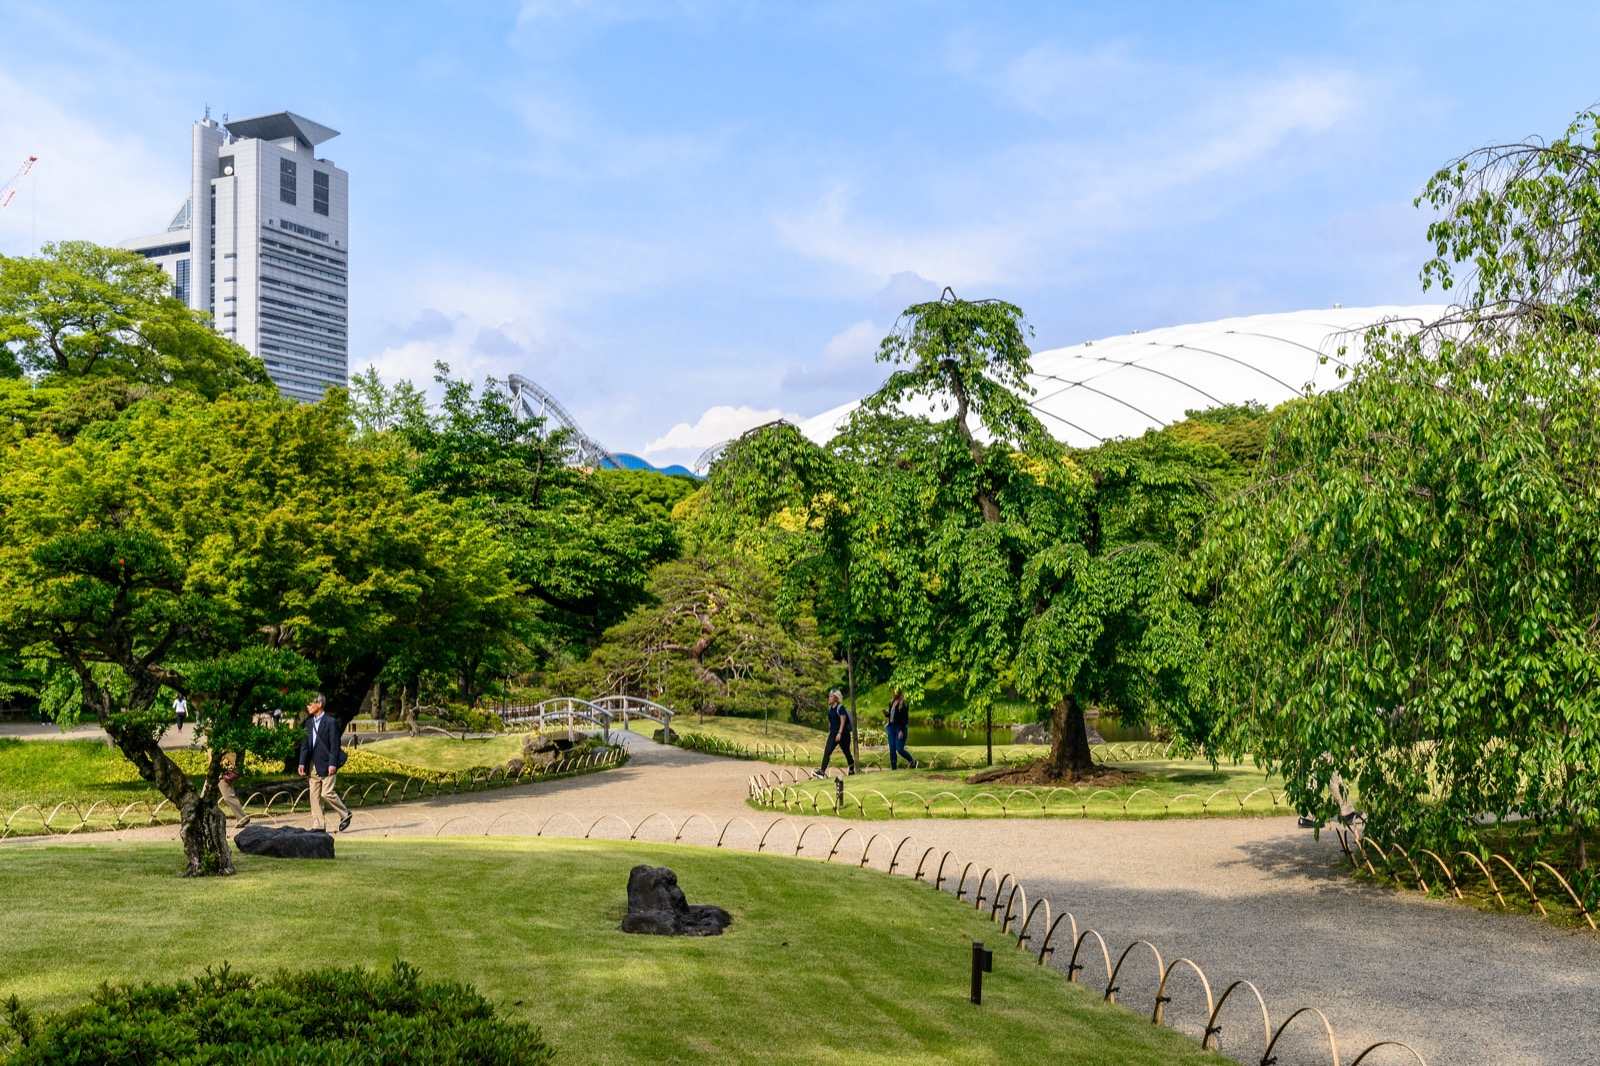 Photo of Koishikawa Korakuen Garden, Japan (Koishikawa Kōrakuen, Tokyo, Japan by dconvertini)